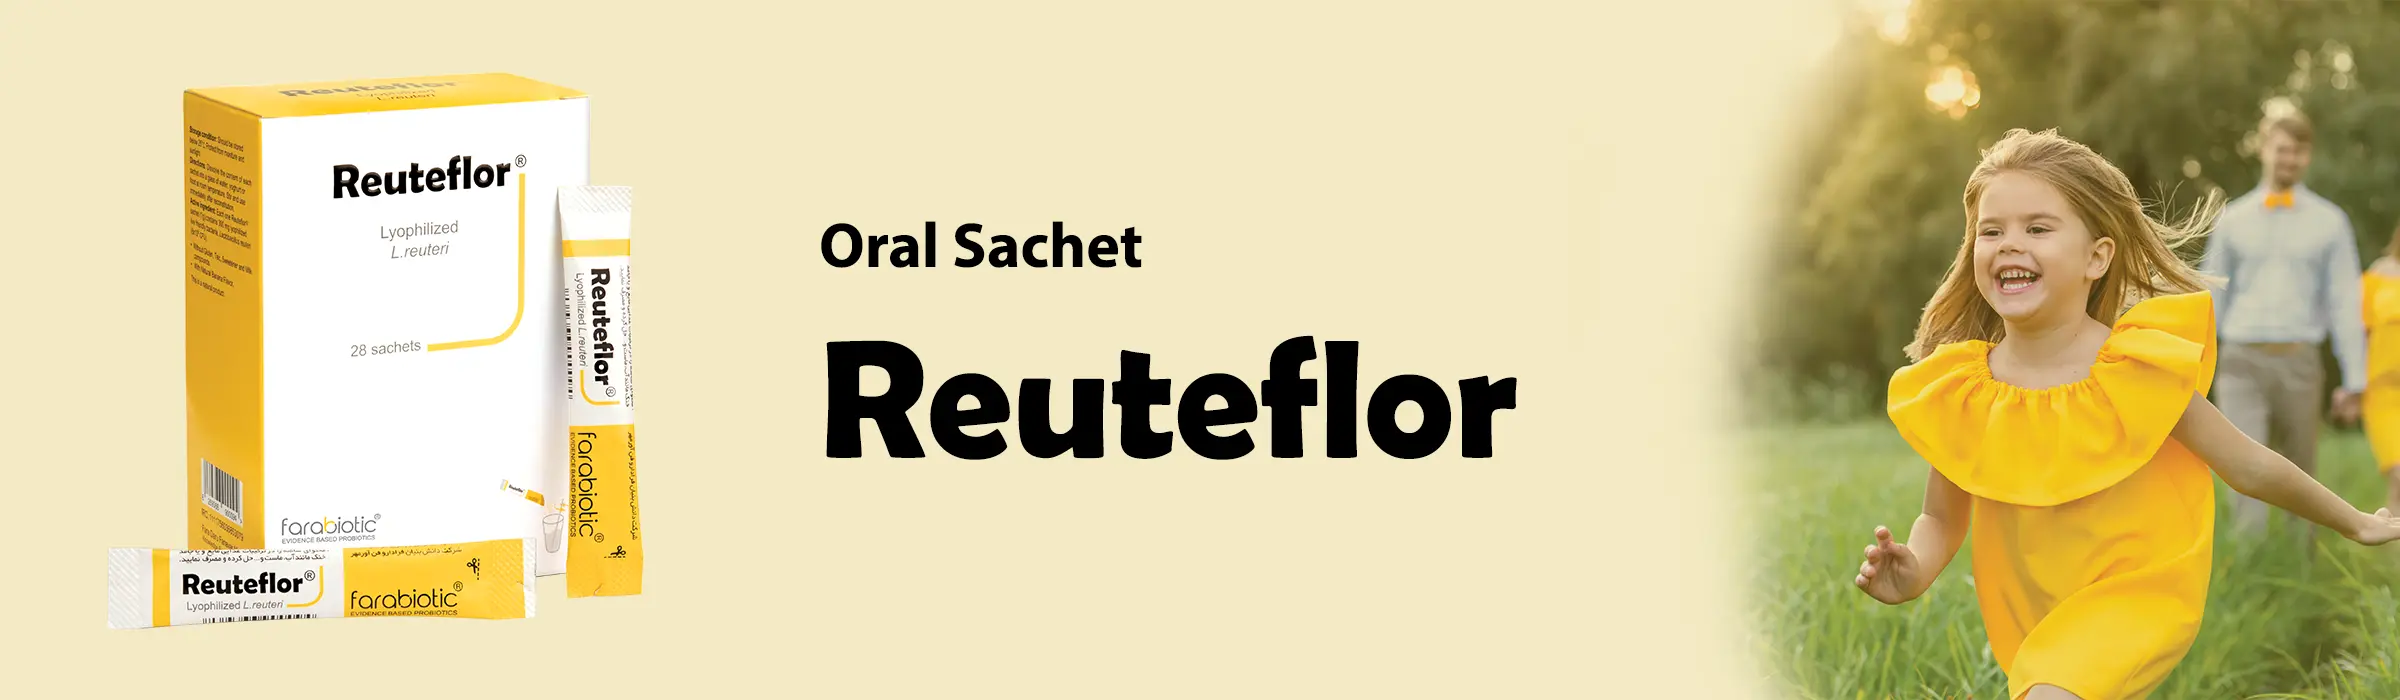 Reuteflor Sachet ®